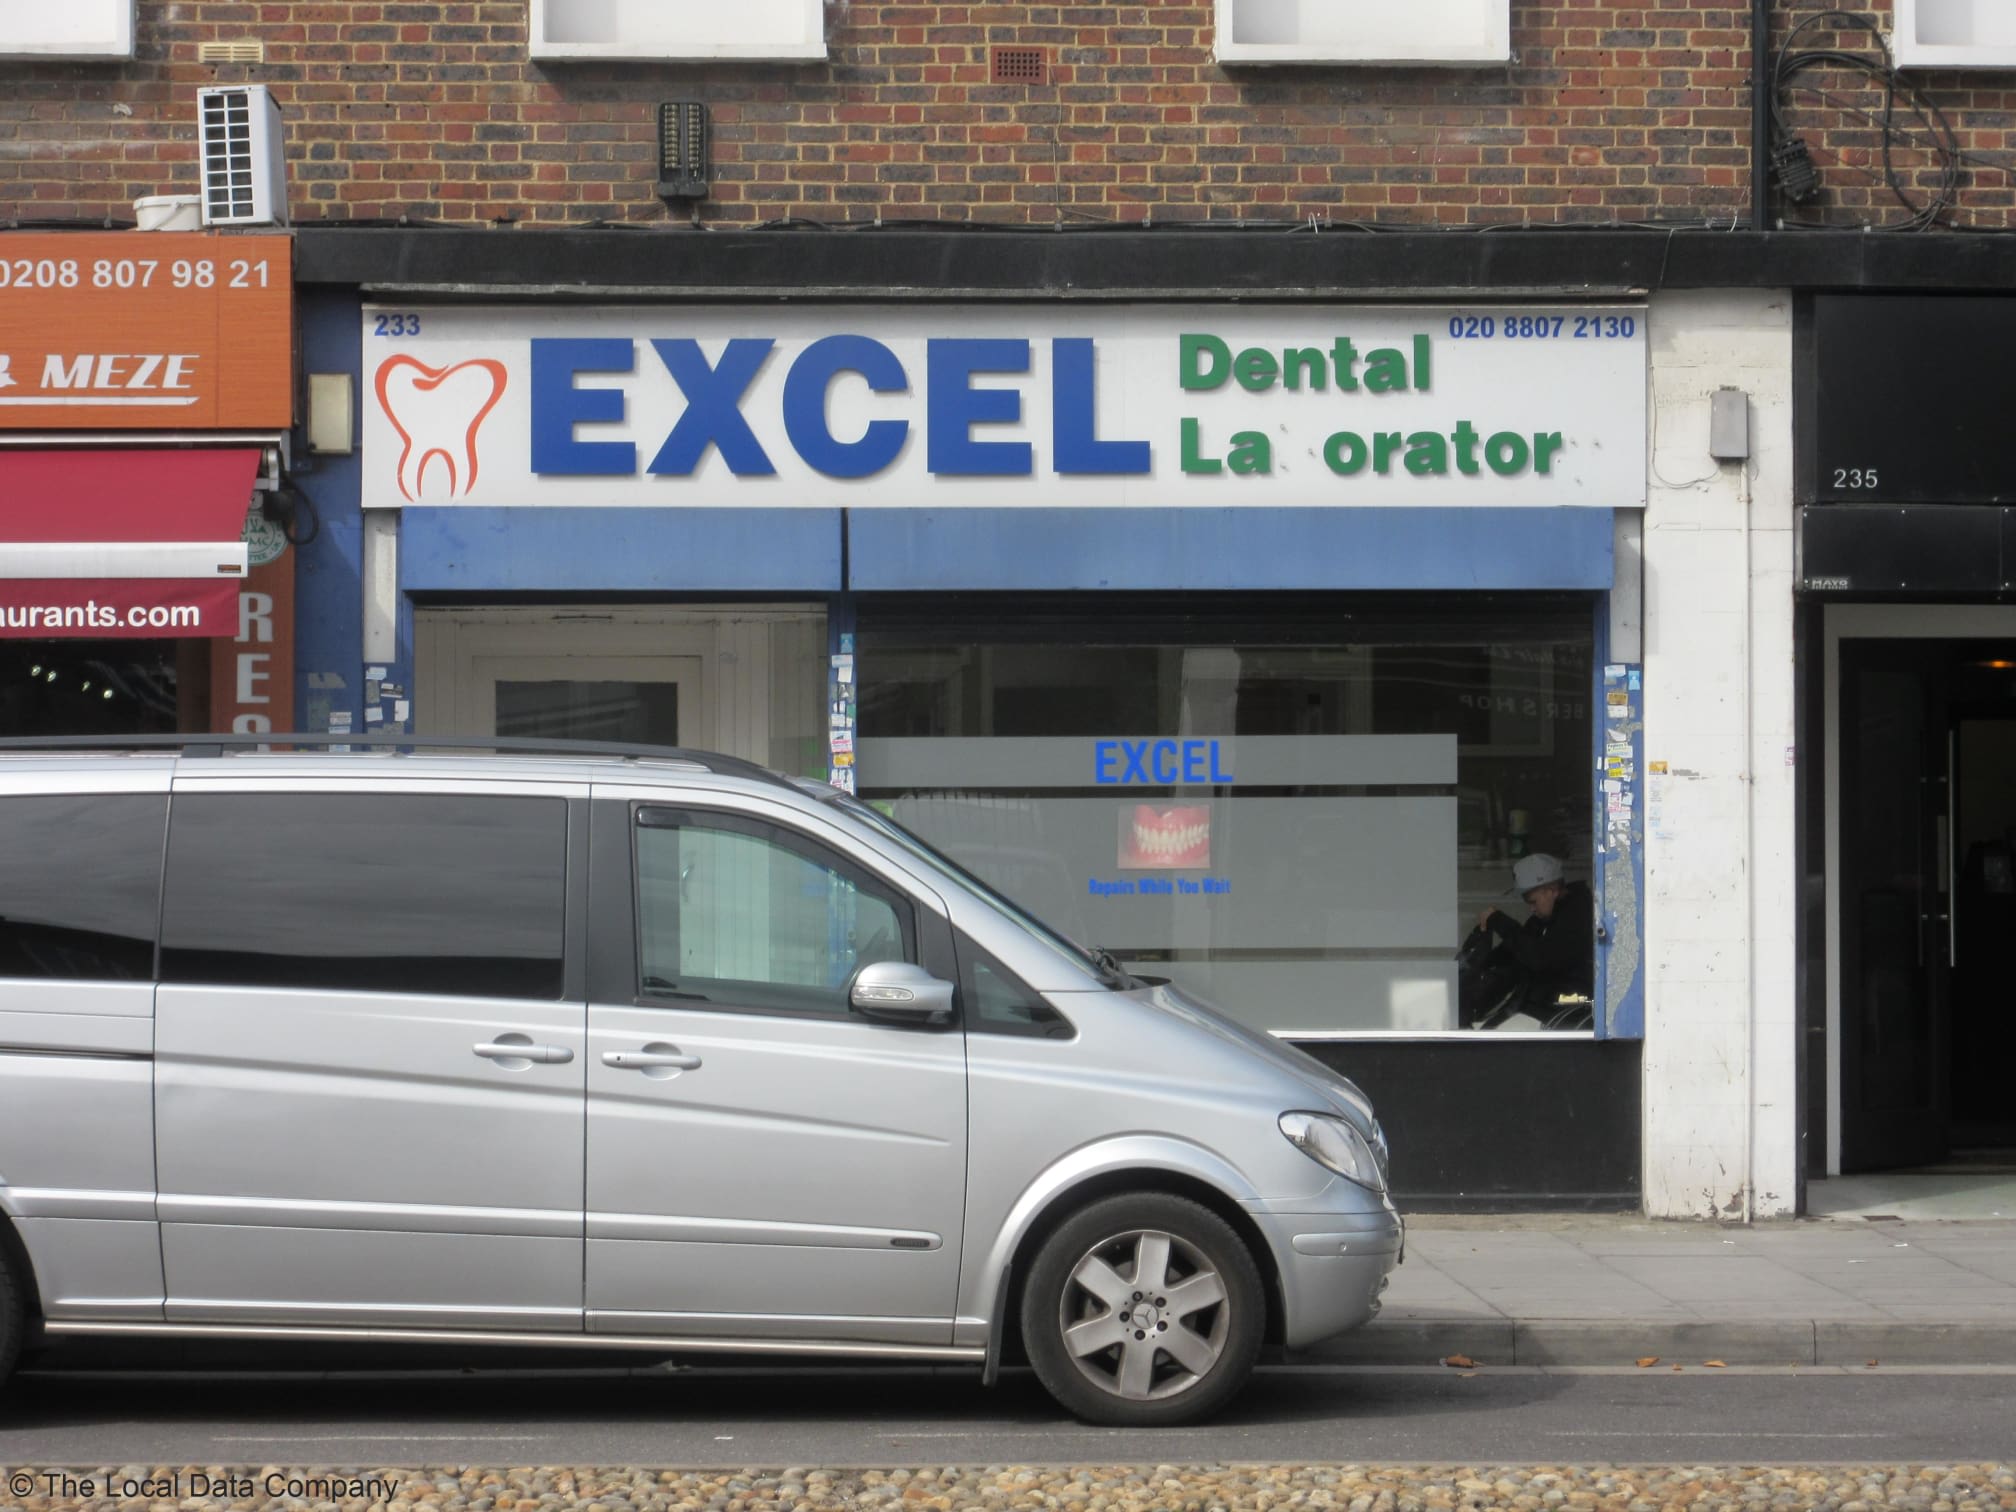 Excel Dental Laboratory Ltd London 020 8807 2130